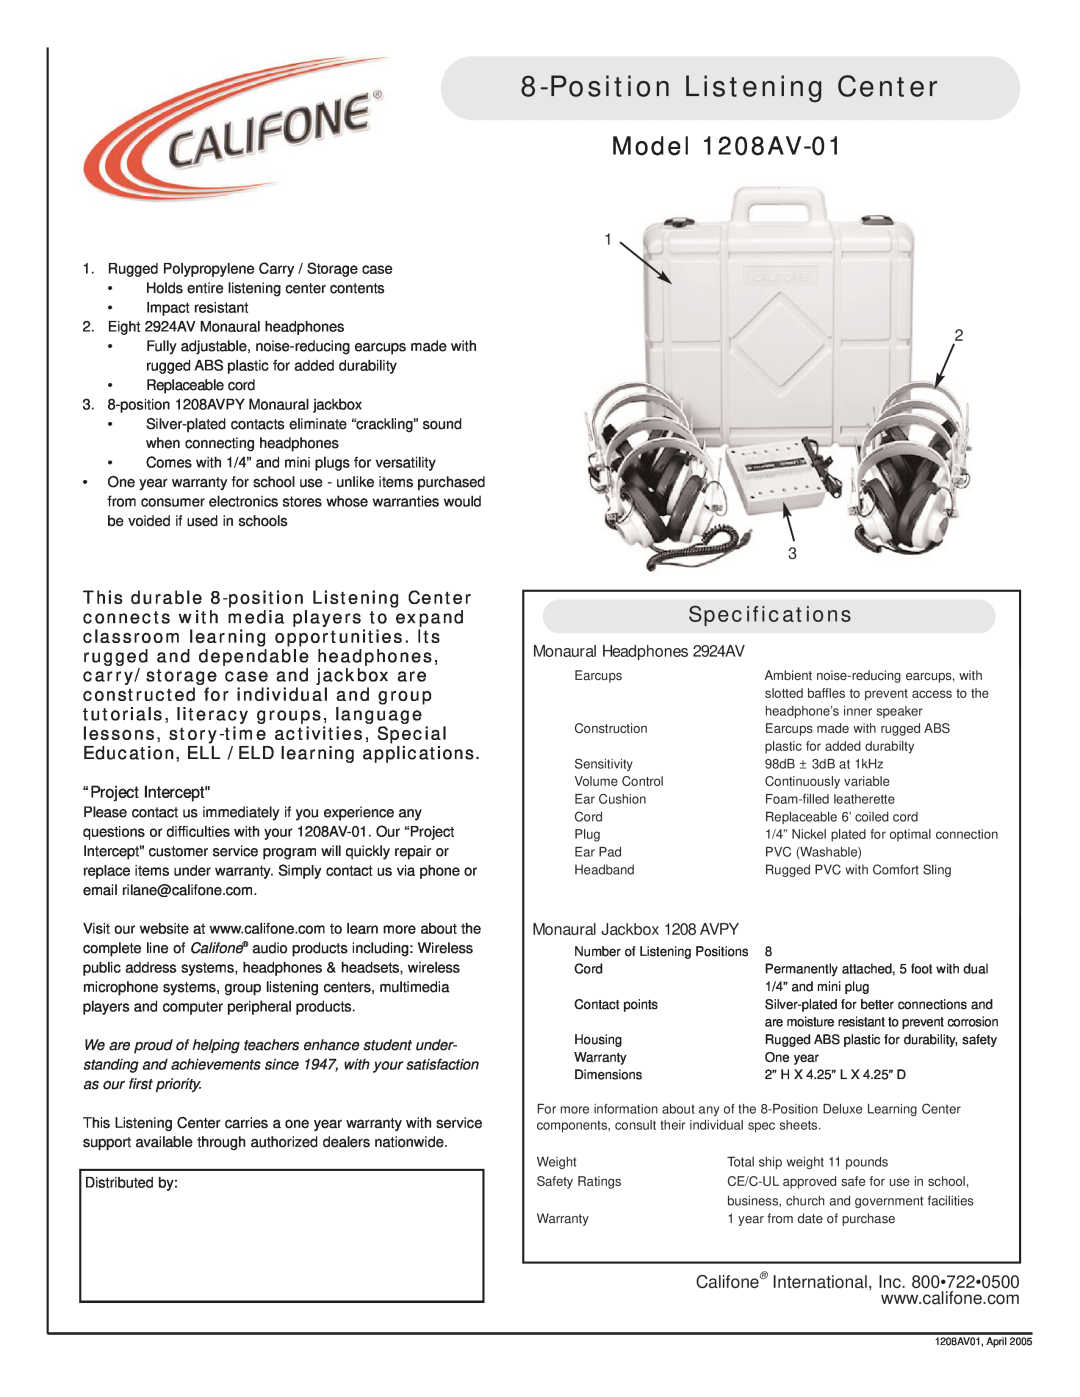 Califone specifications PositionListening Center, Model 1208AV-01, Specifications, Califone International, Inc 